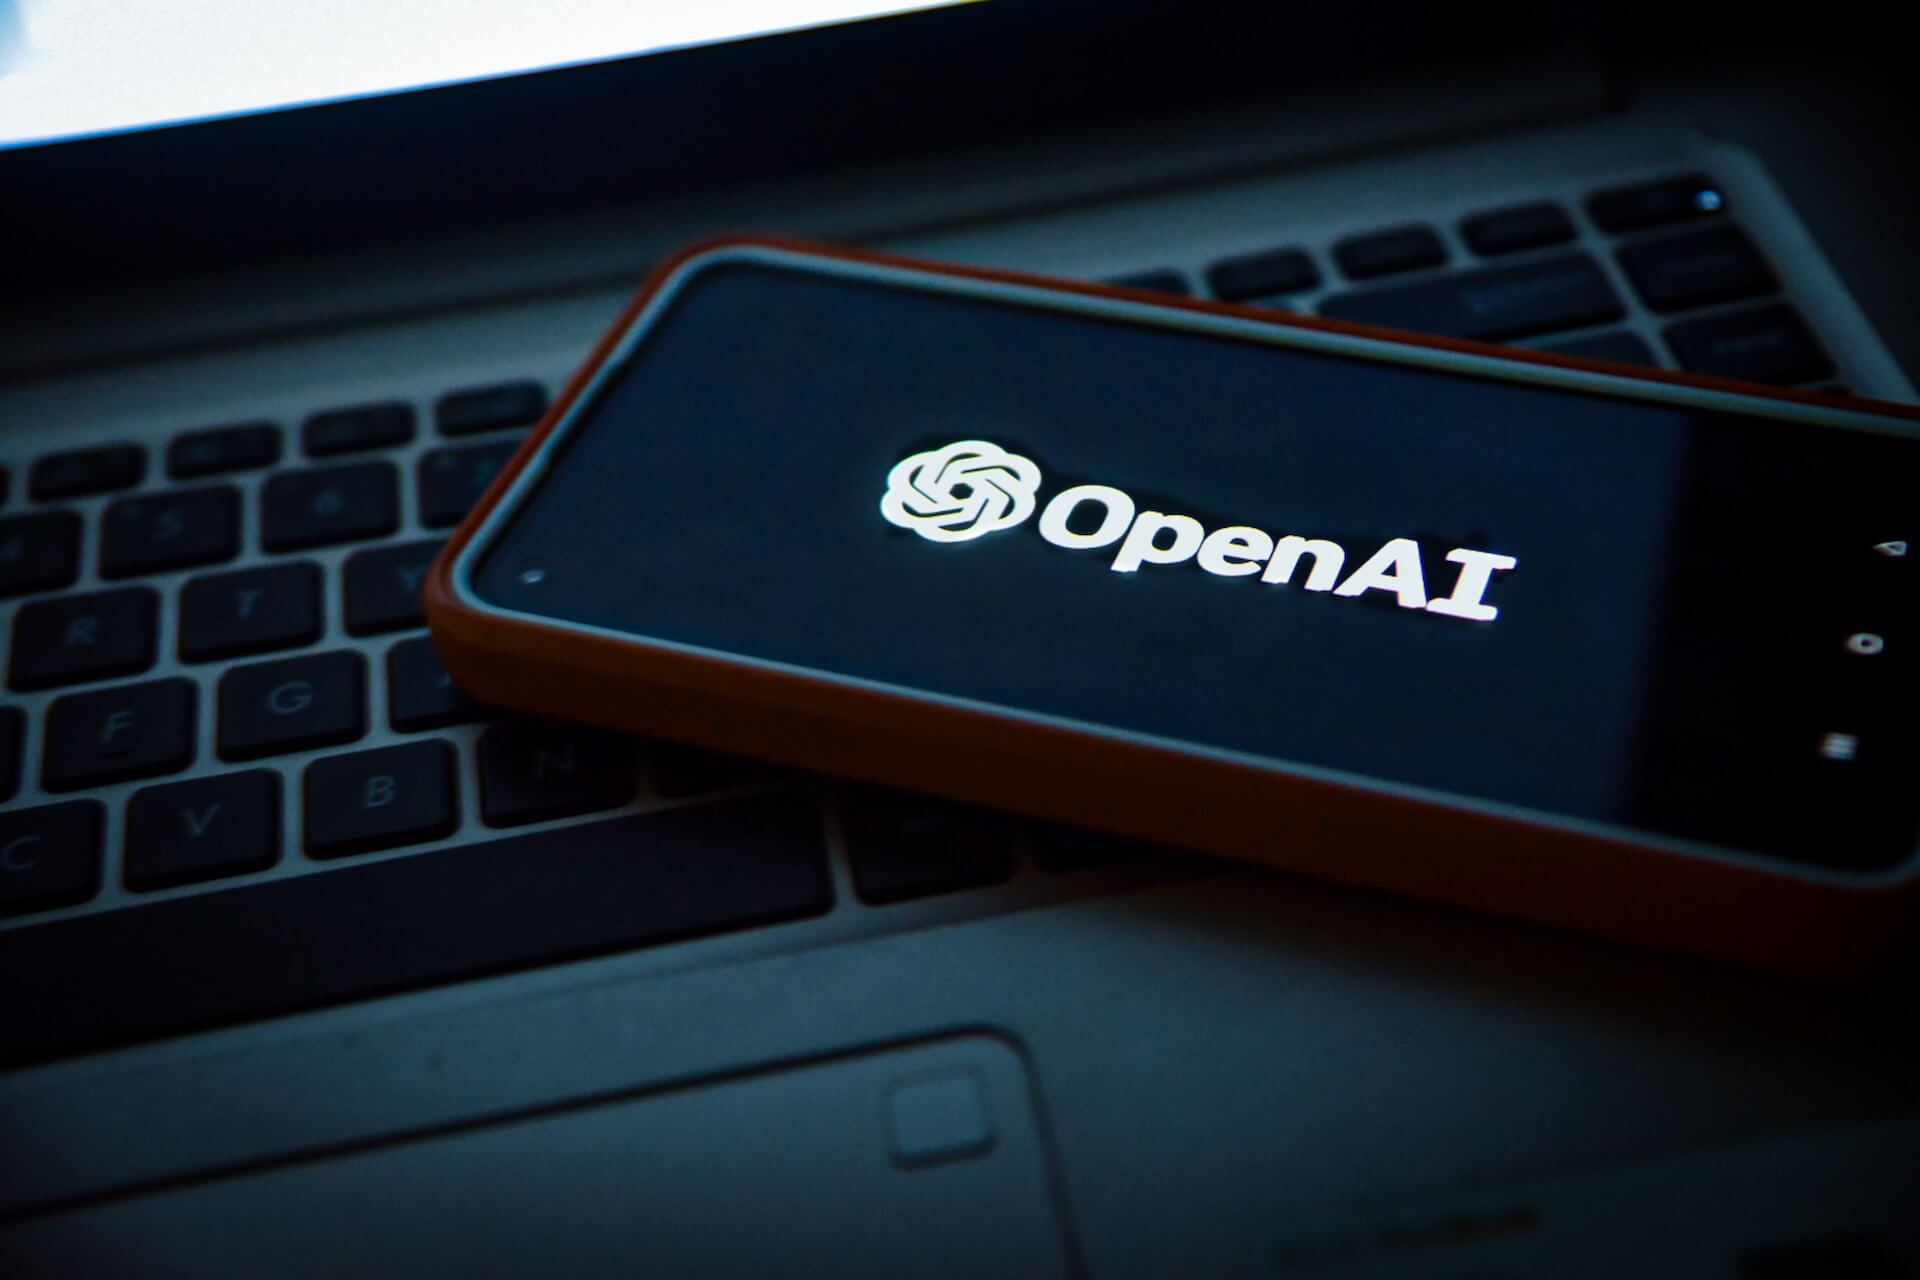 OpenAI logo on smartphone screen, resting on laptop keyboard